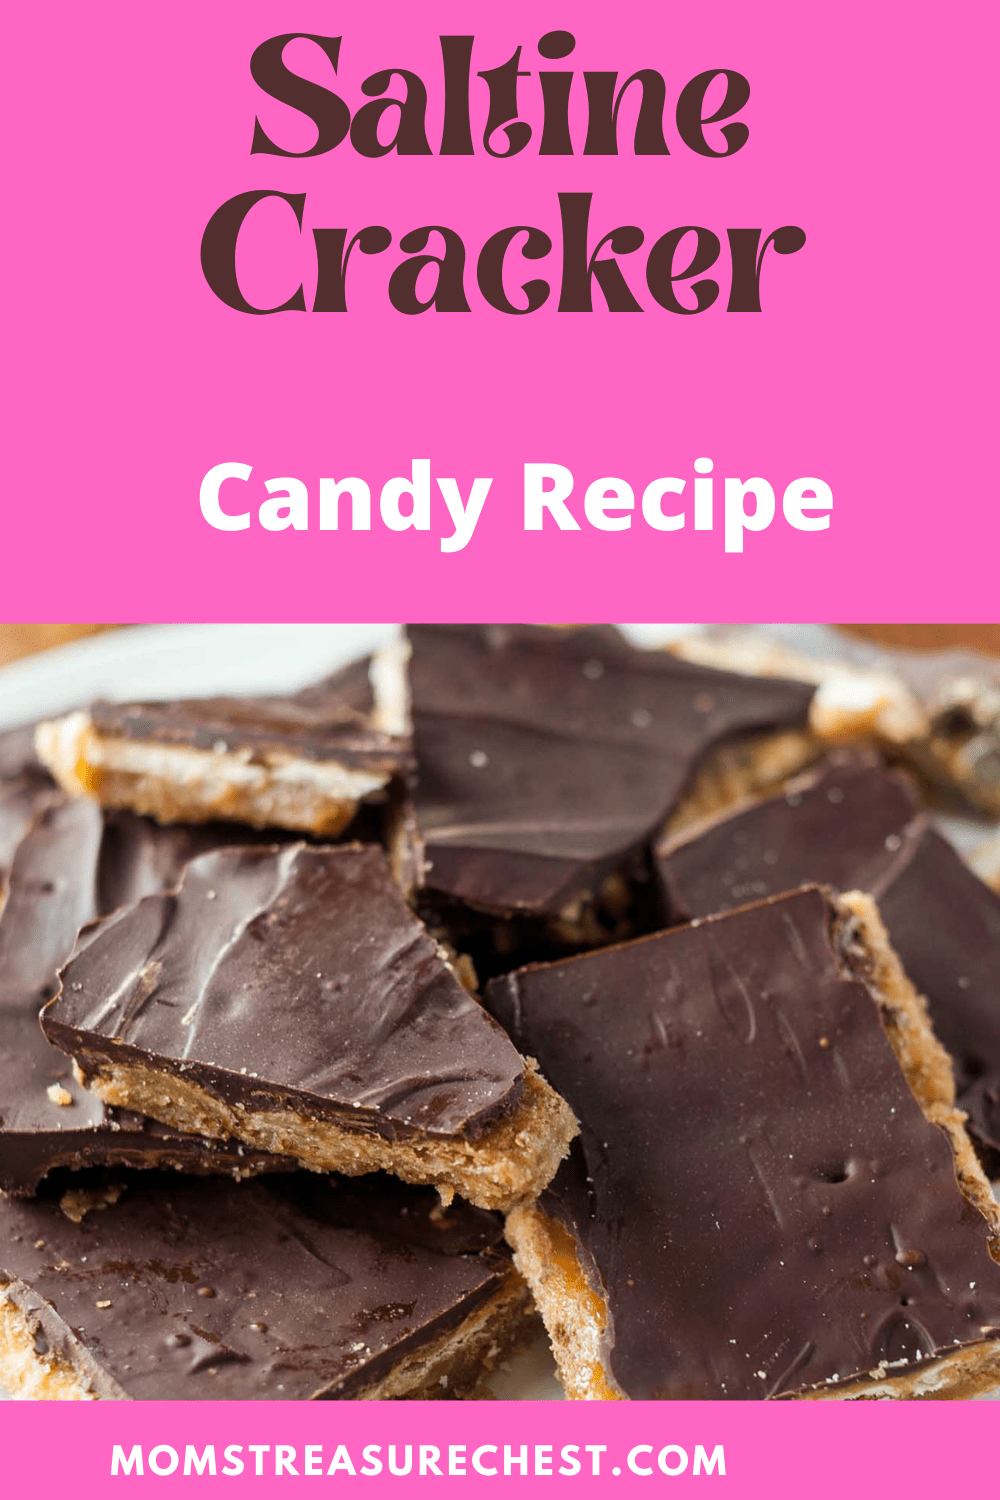 Saltine Cracker Candy Recipe